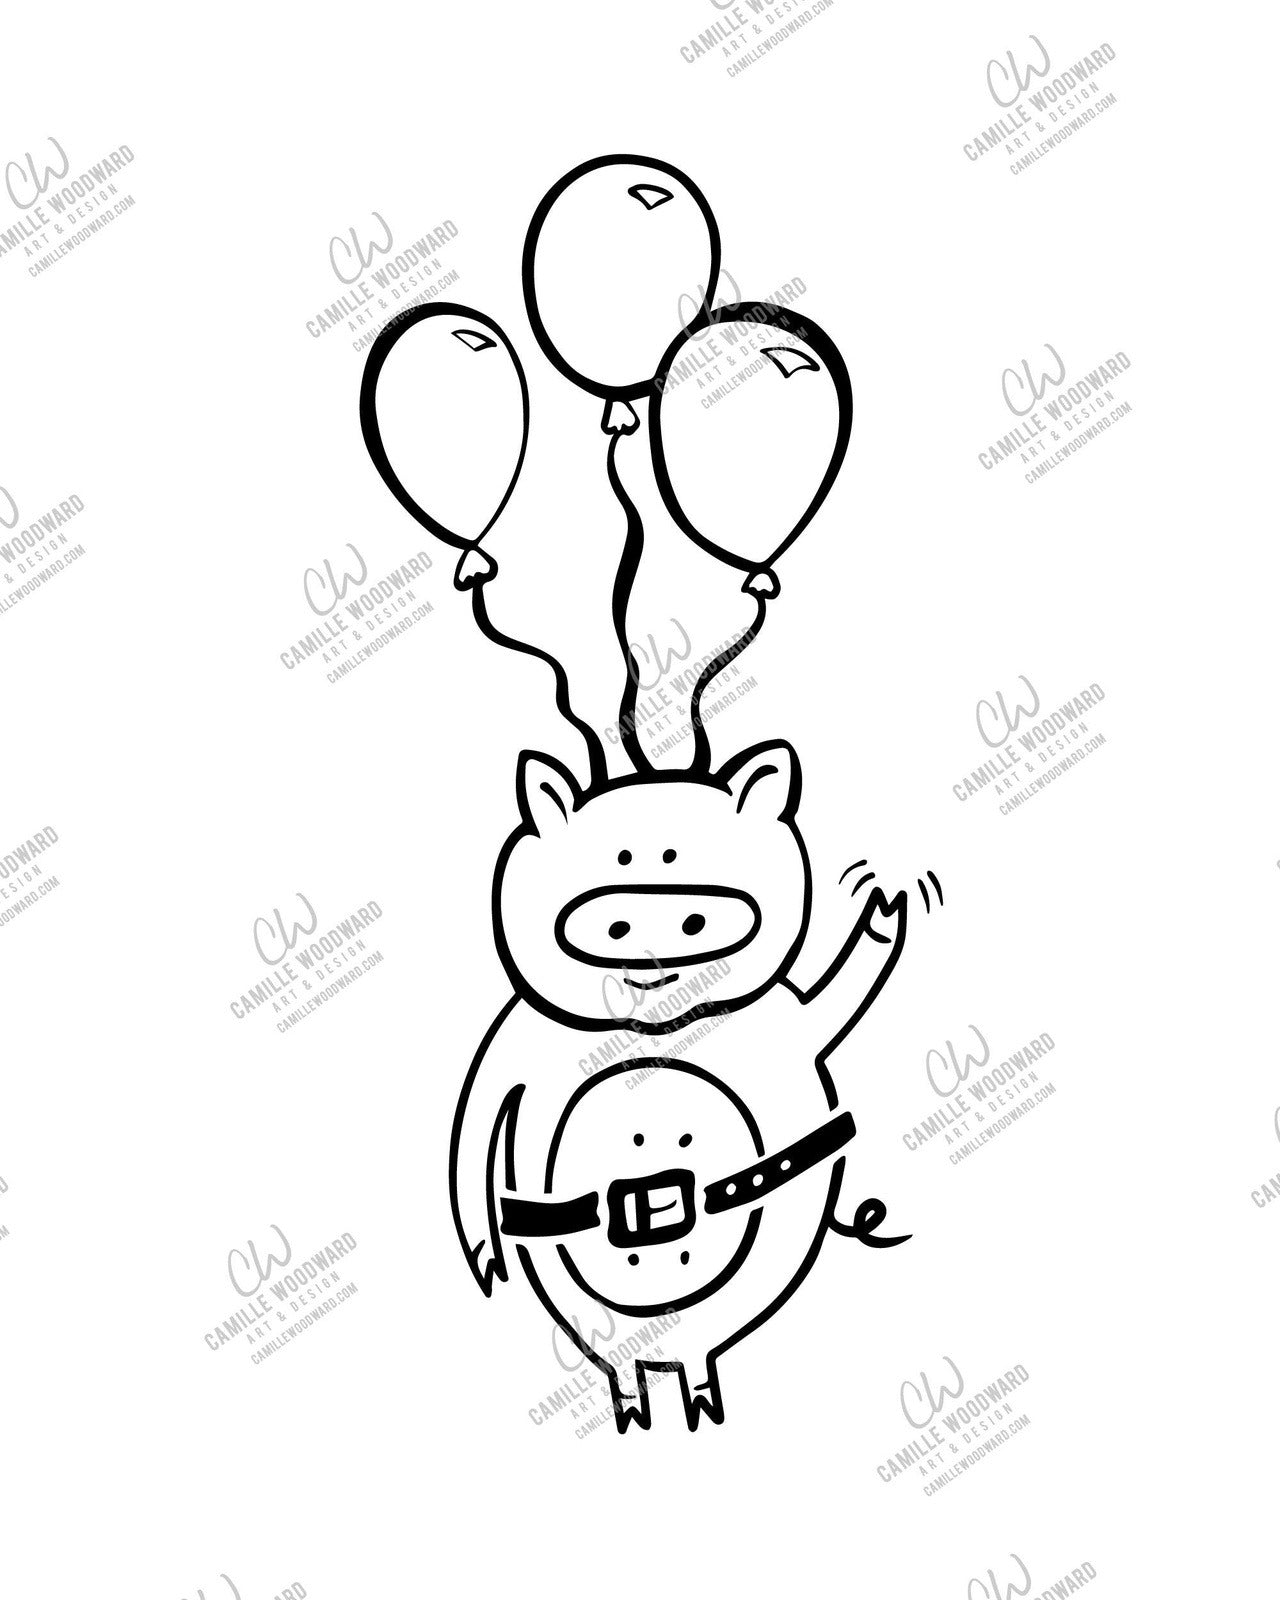 Pig Me Up, Waving Pig with Balloons - SVG Digital Download